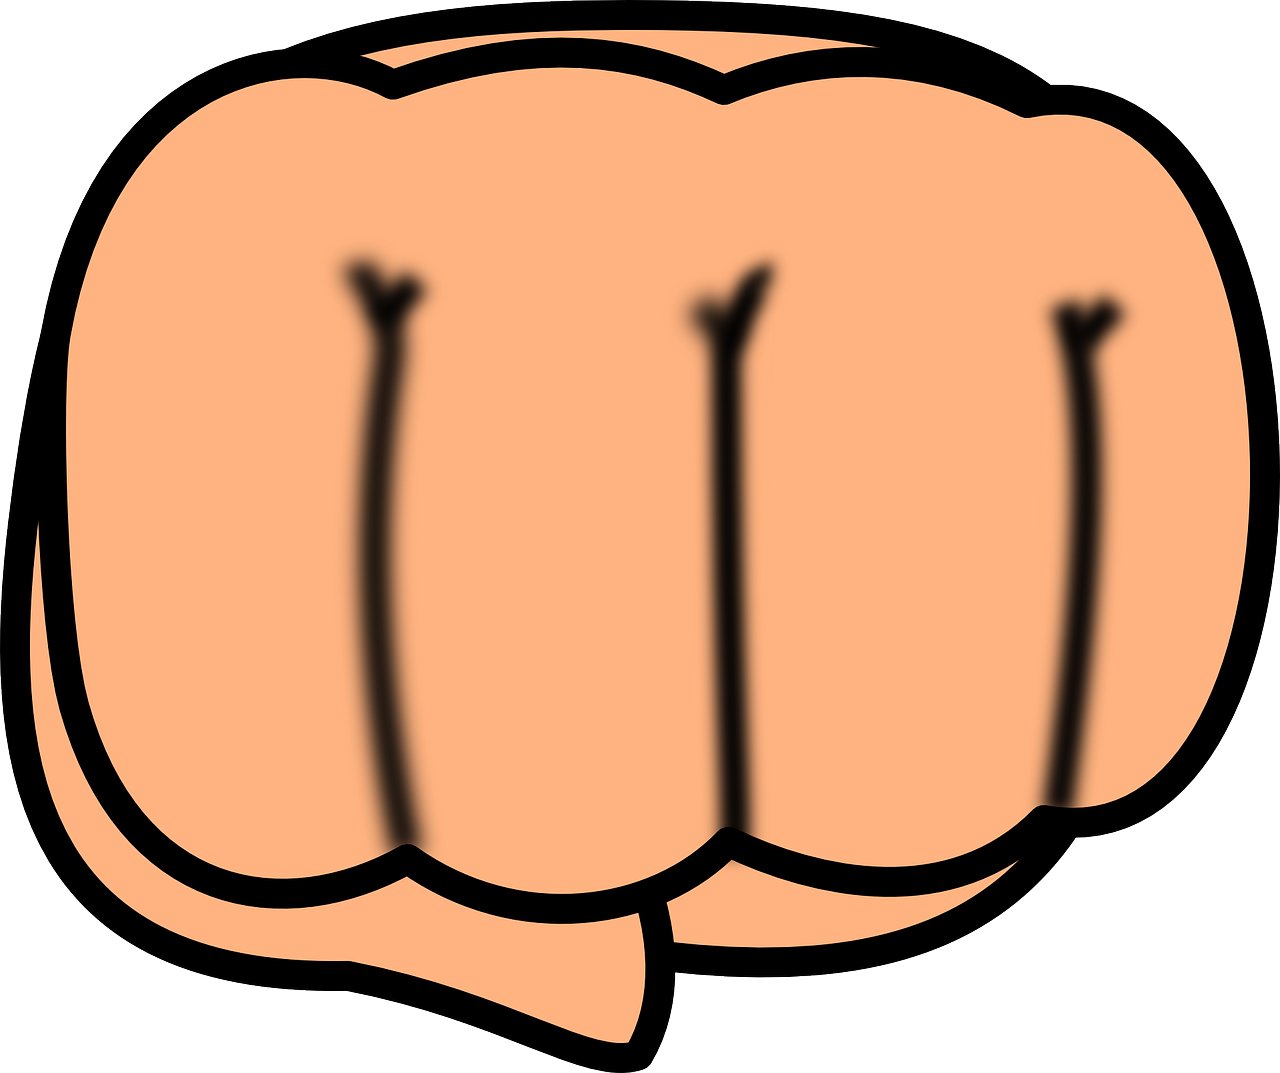 Download PNG image - Force Hand Punch PNG Transparent Image 